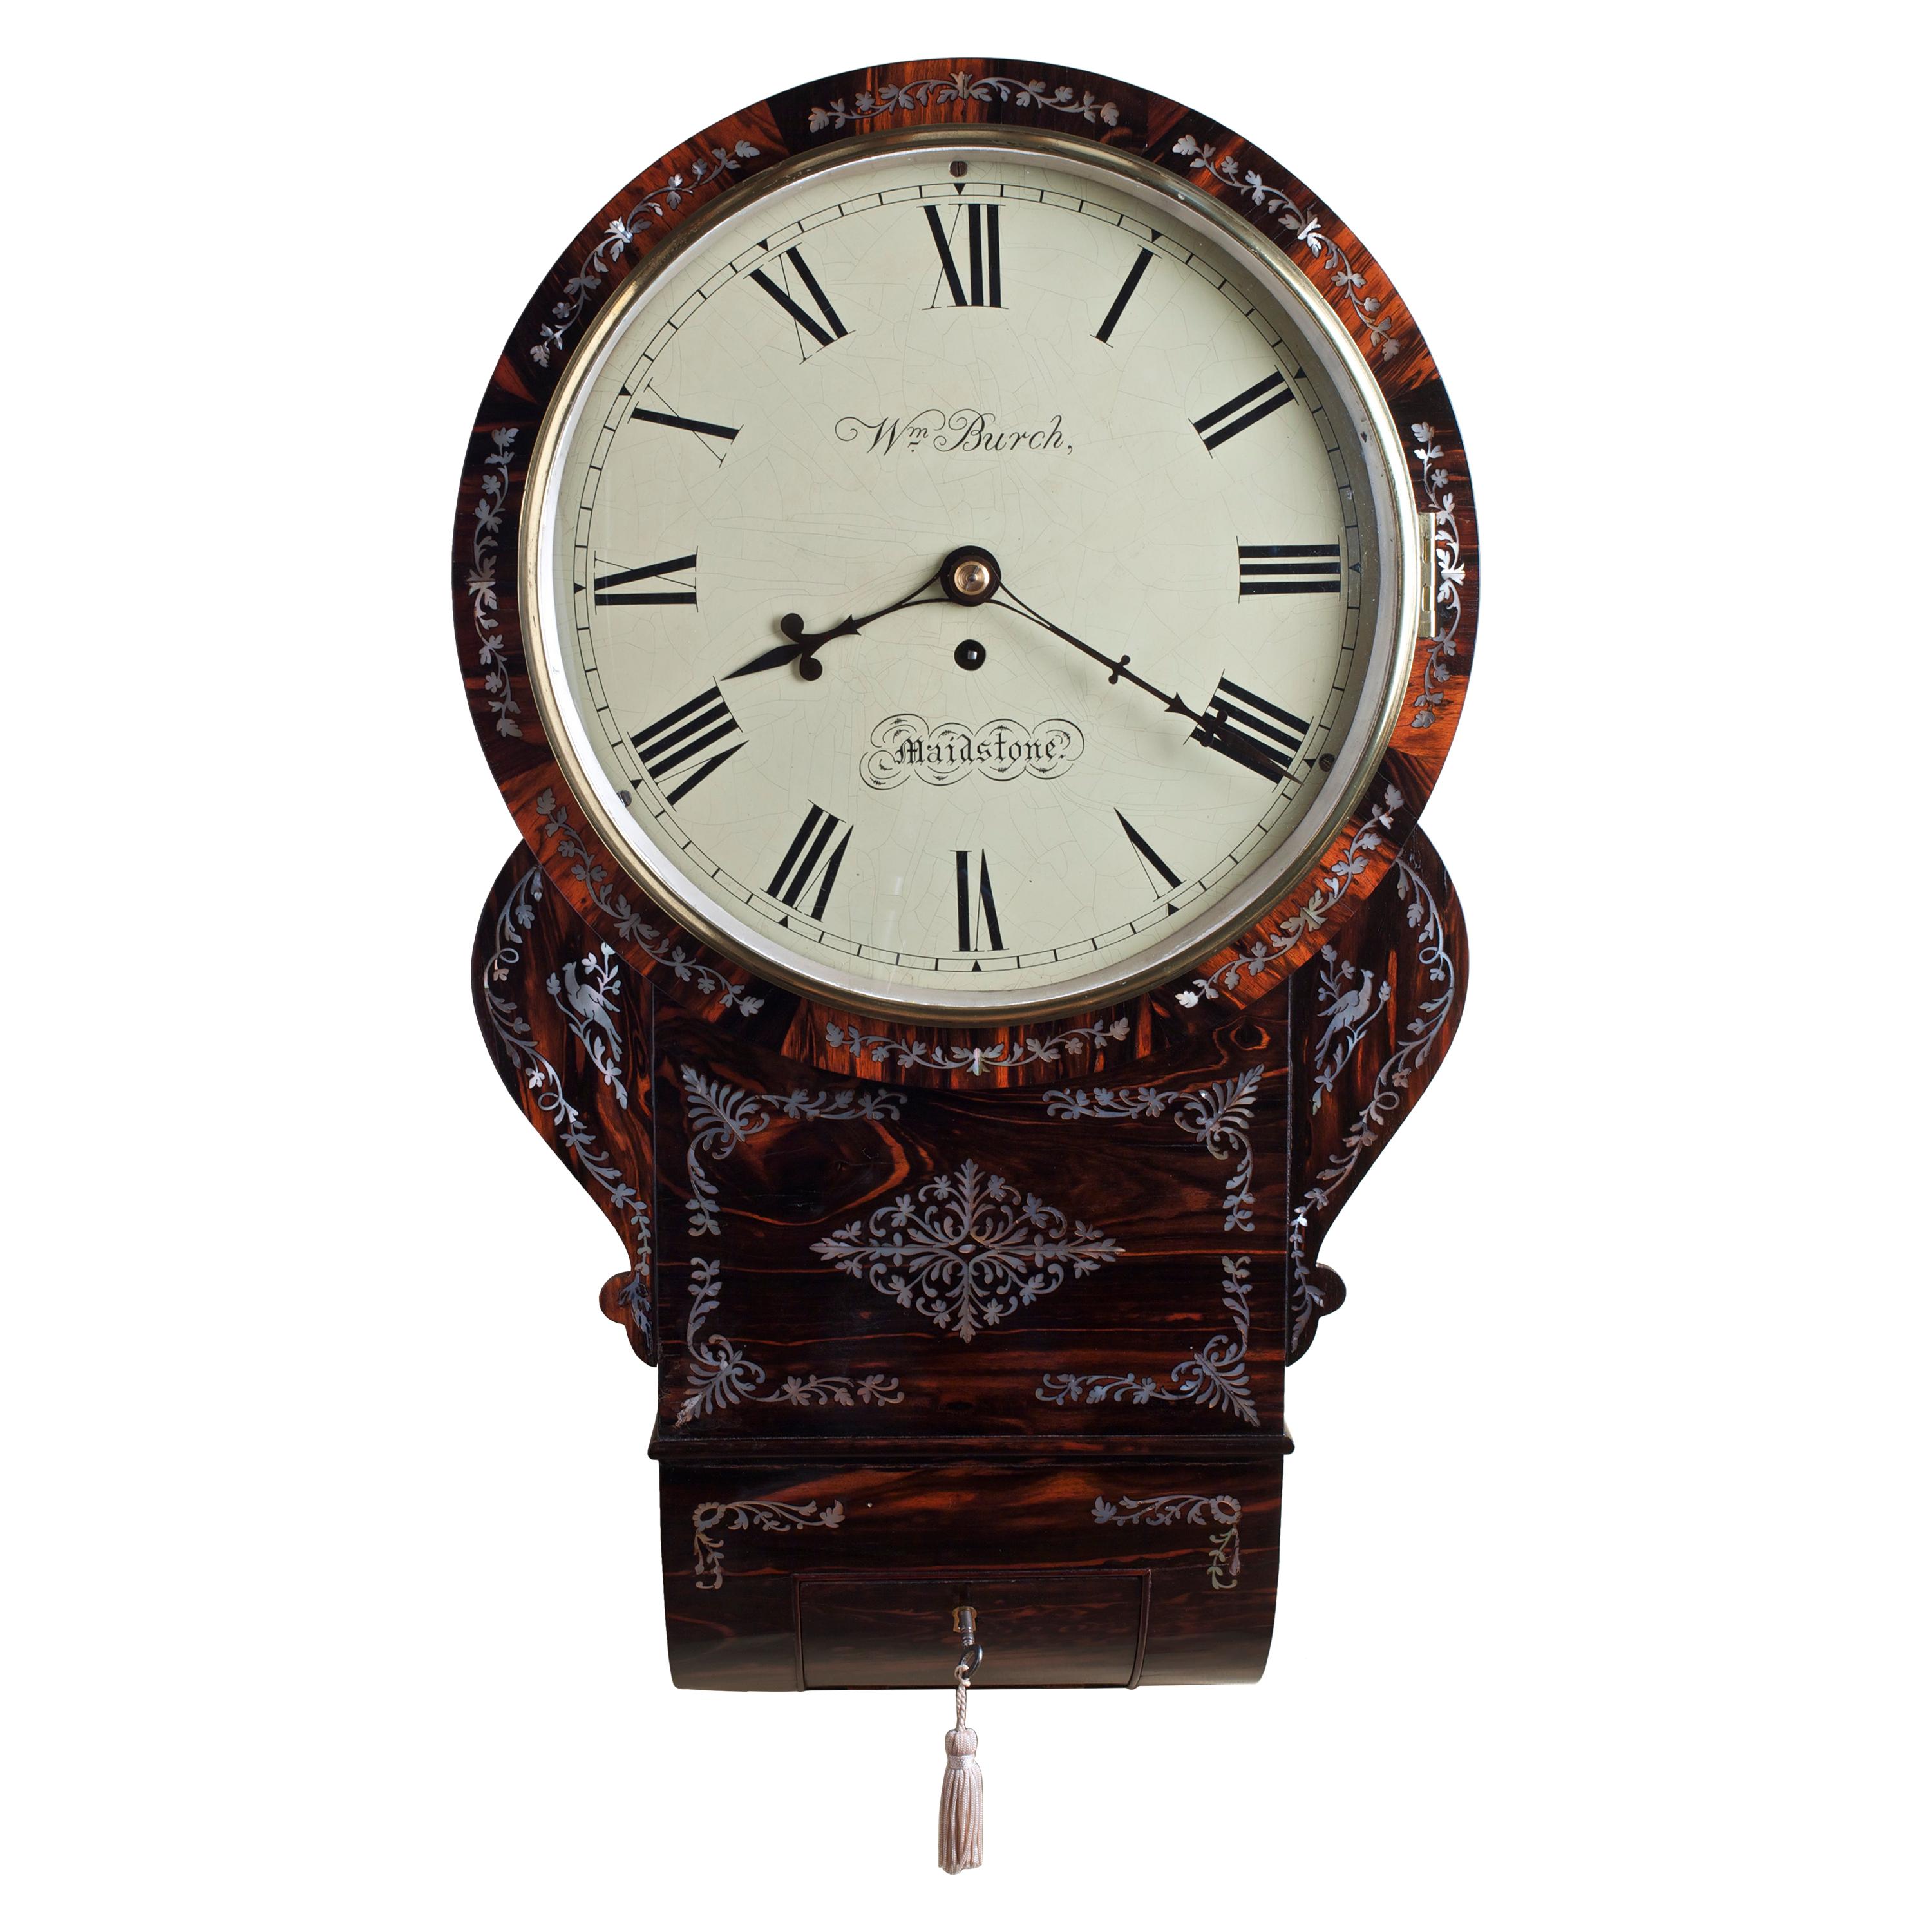 Regency English Coromandel Drop Dial Wall Clock by William Burch, Maidstone For Sale